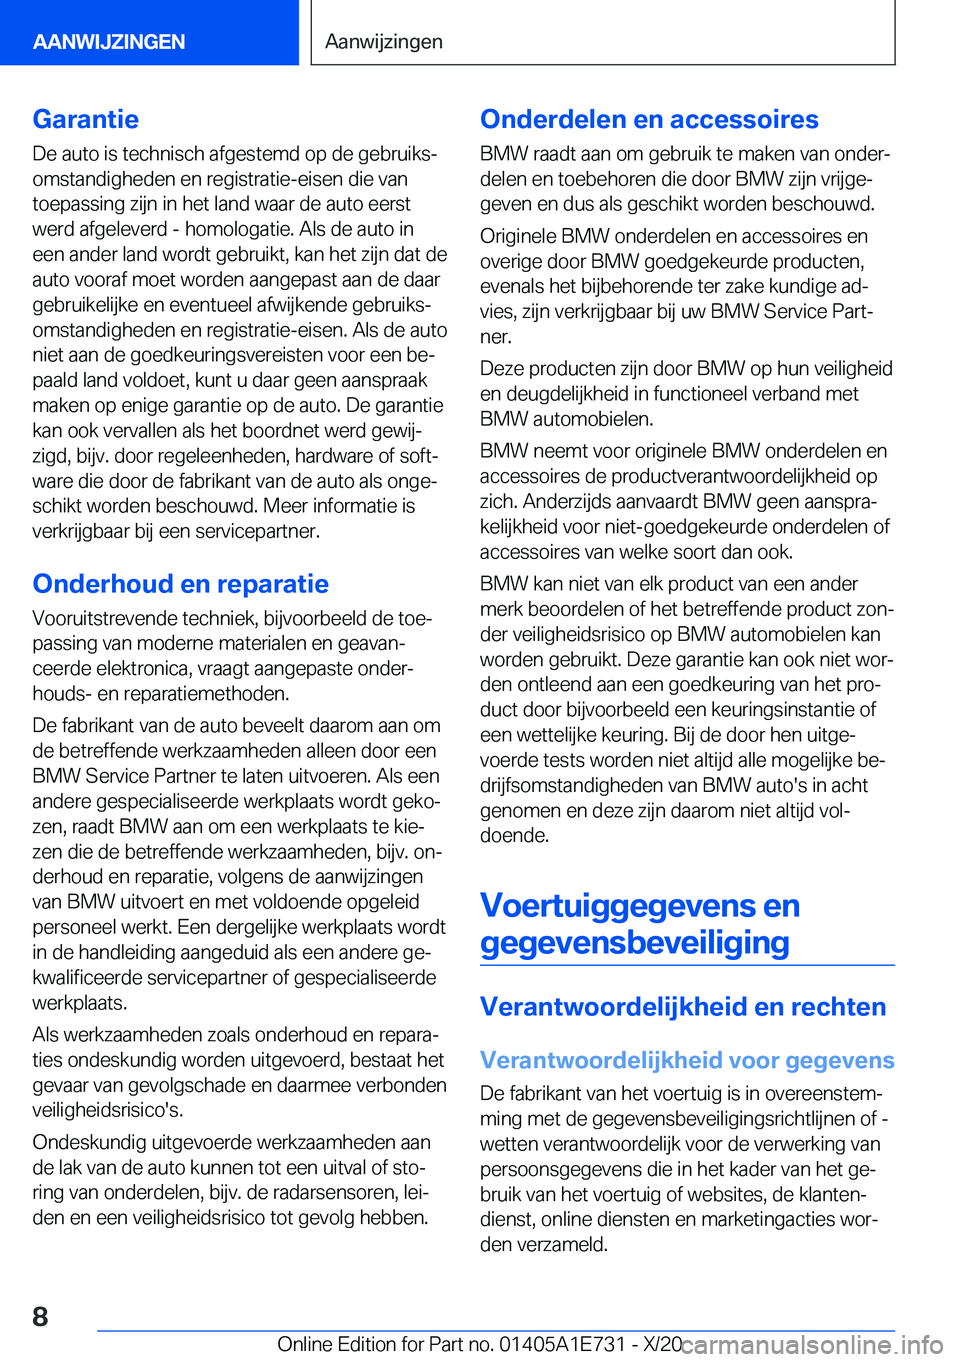 BMW X2 2021  Instructieboekjes (in Dutch) �G�a�r�a�n�t�i�e�D�e��a�u�t�o��i�s��t�e�c�h�n�i�s�c�h��a�f�g�e�s�t�e�m�d��o�p��d�e��g�e�b�r�u�i�k�sj
�o�m�s�t�a�n�d�i�g�h�e�d�e�n��e�n��r�e�g�i�s�t�r�a�t�i�e�-�e�i�s�e�n��d�i�e��v�a�n �t�o